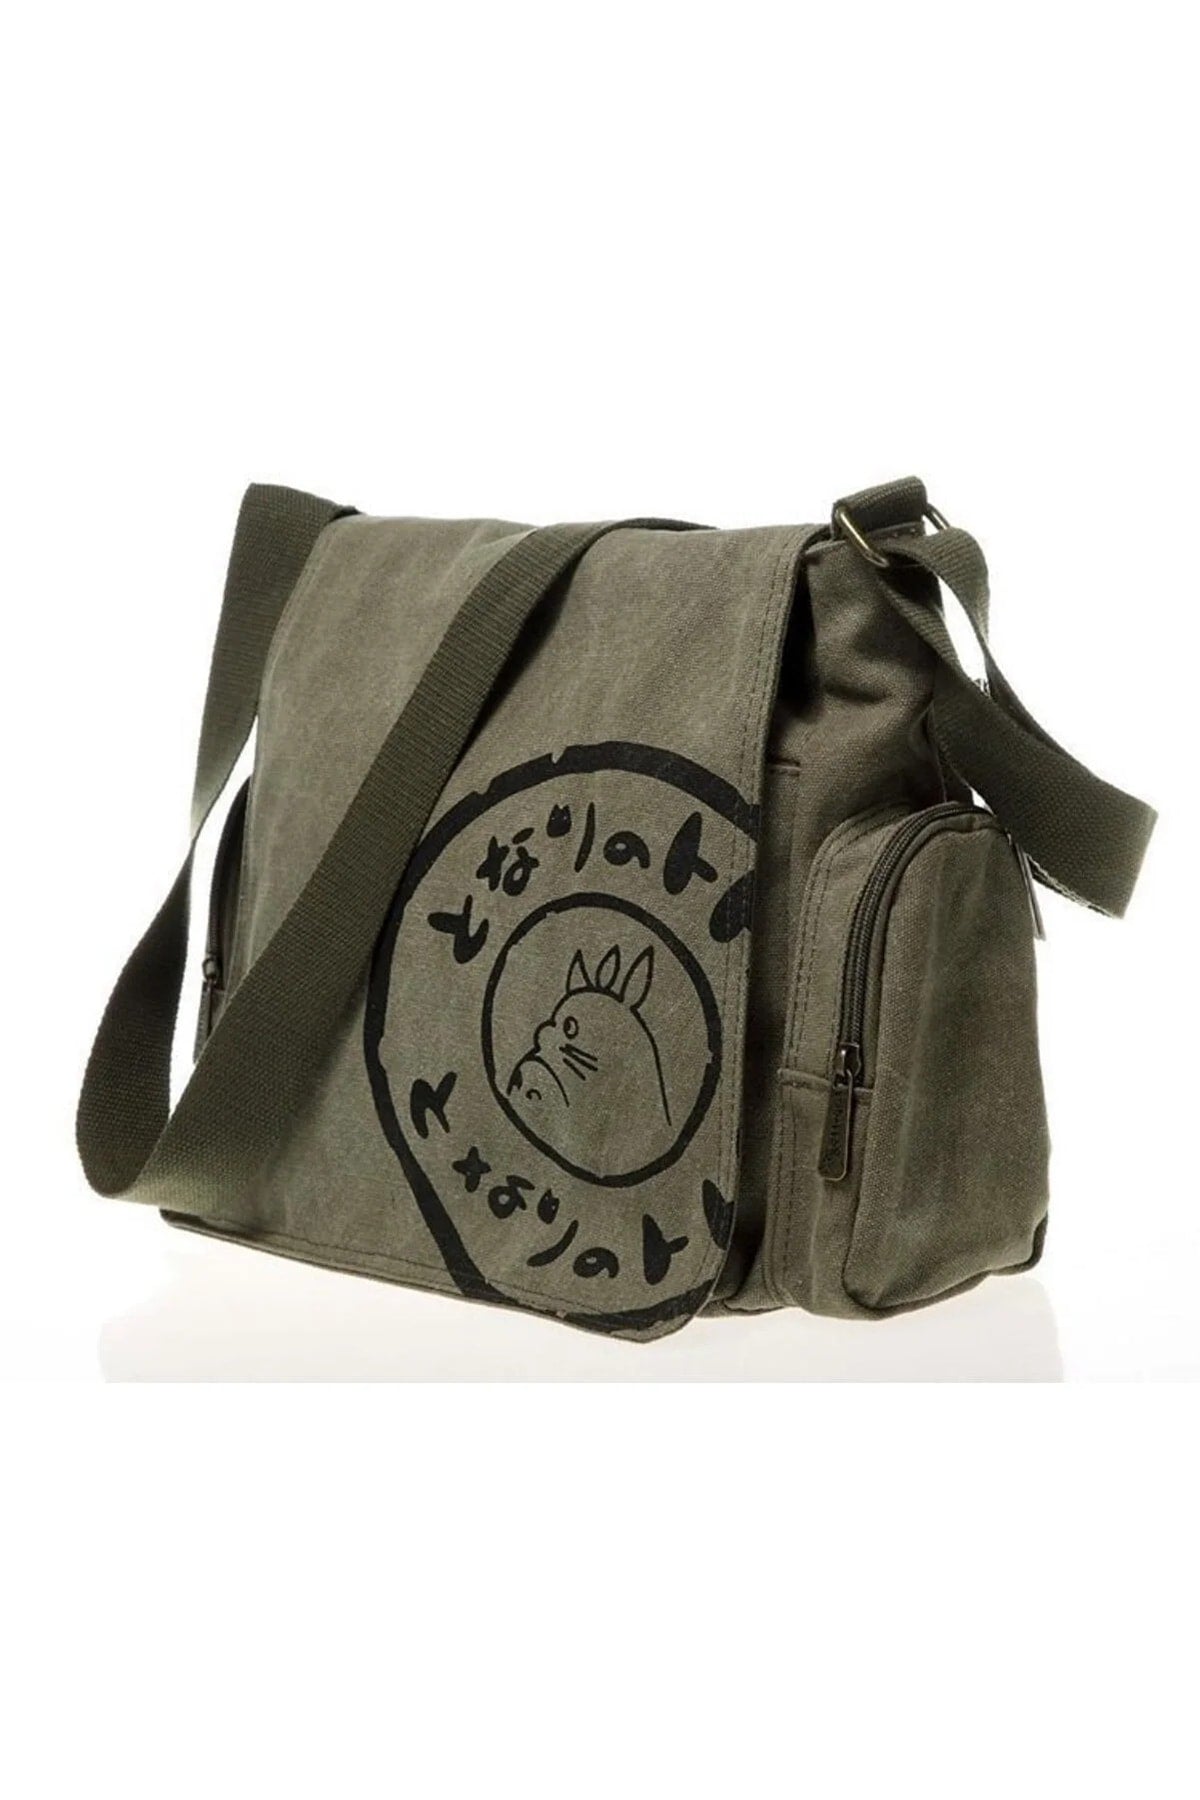 Khaki Totoro Postman Bag